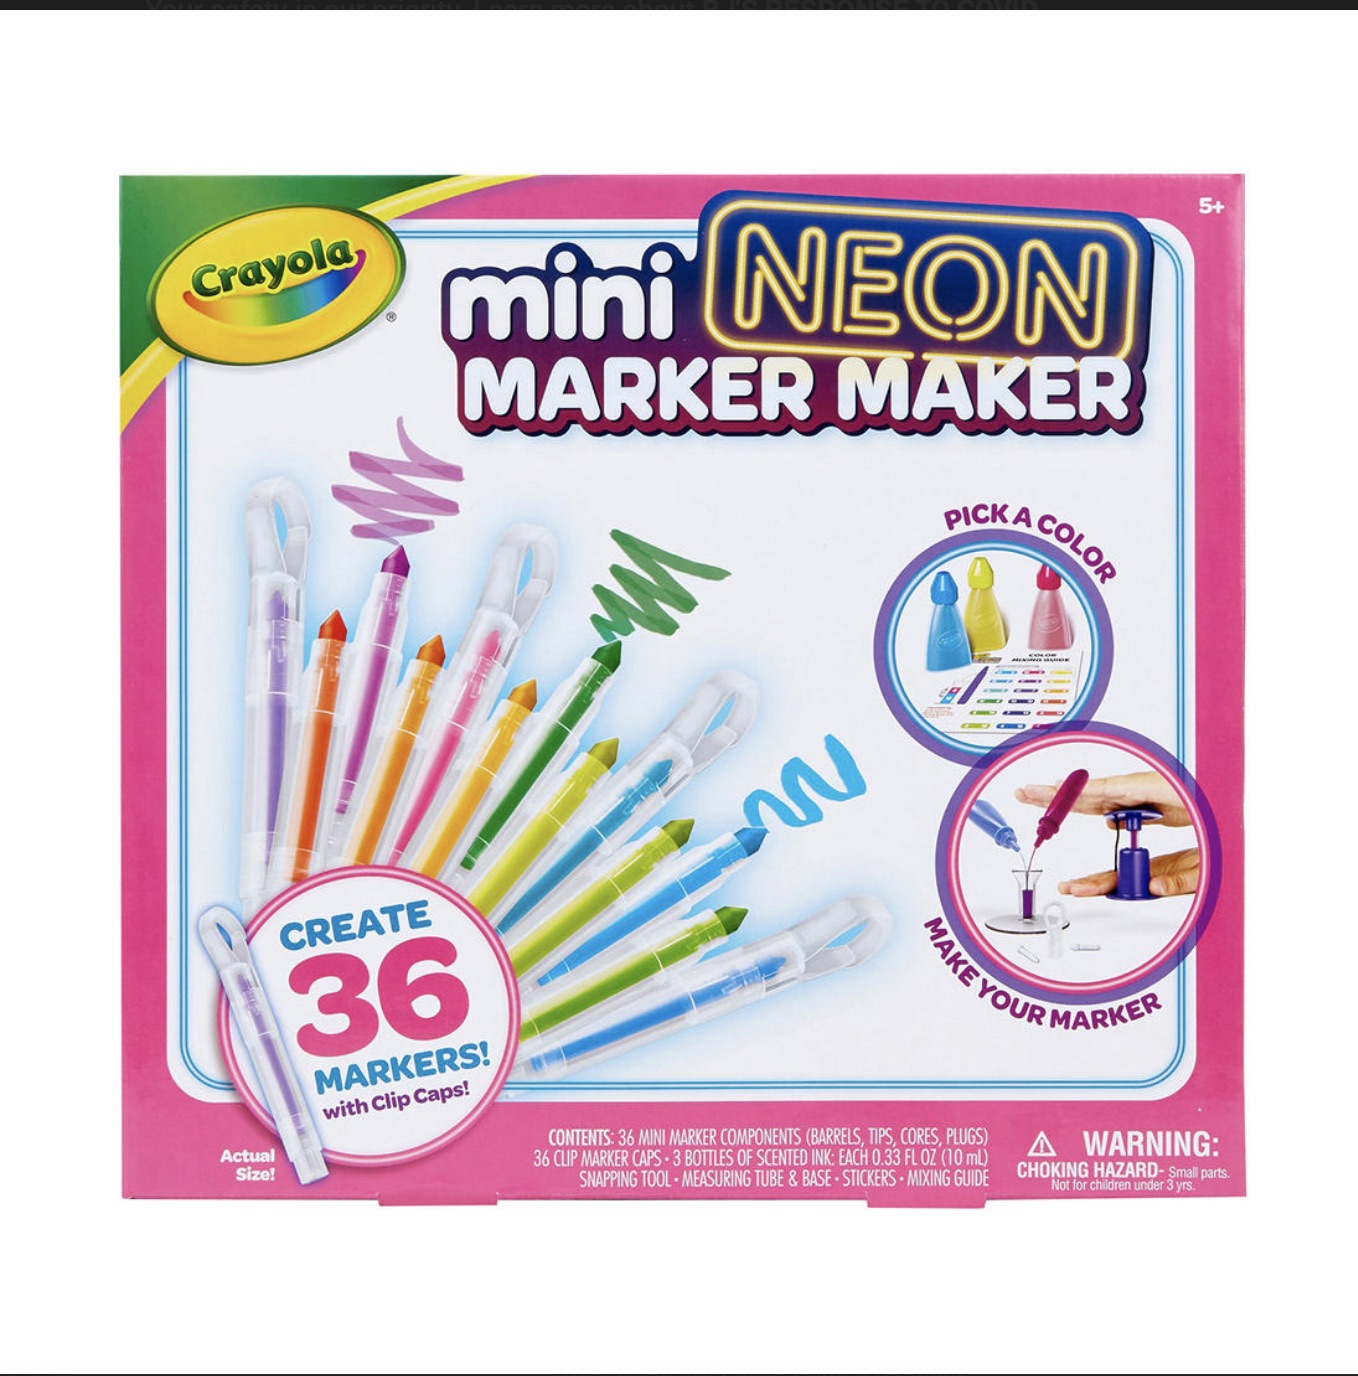 Crayola Mini Neon Marker Maker Art Set Bjs.com or In Store Clearance $3.98